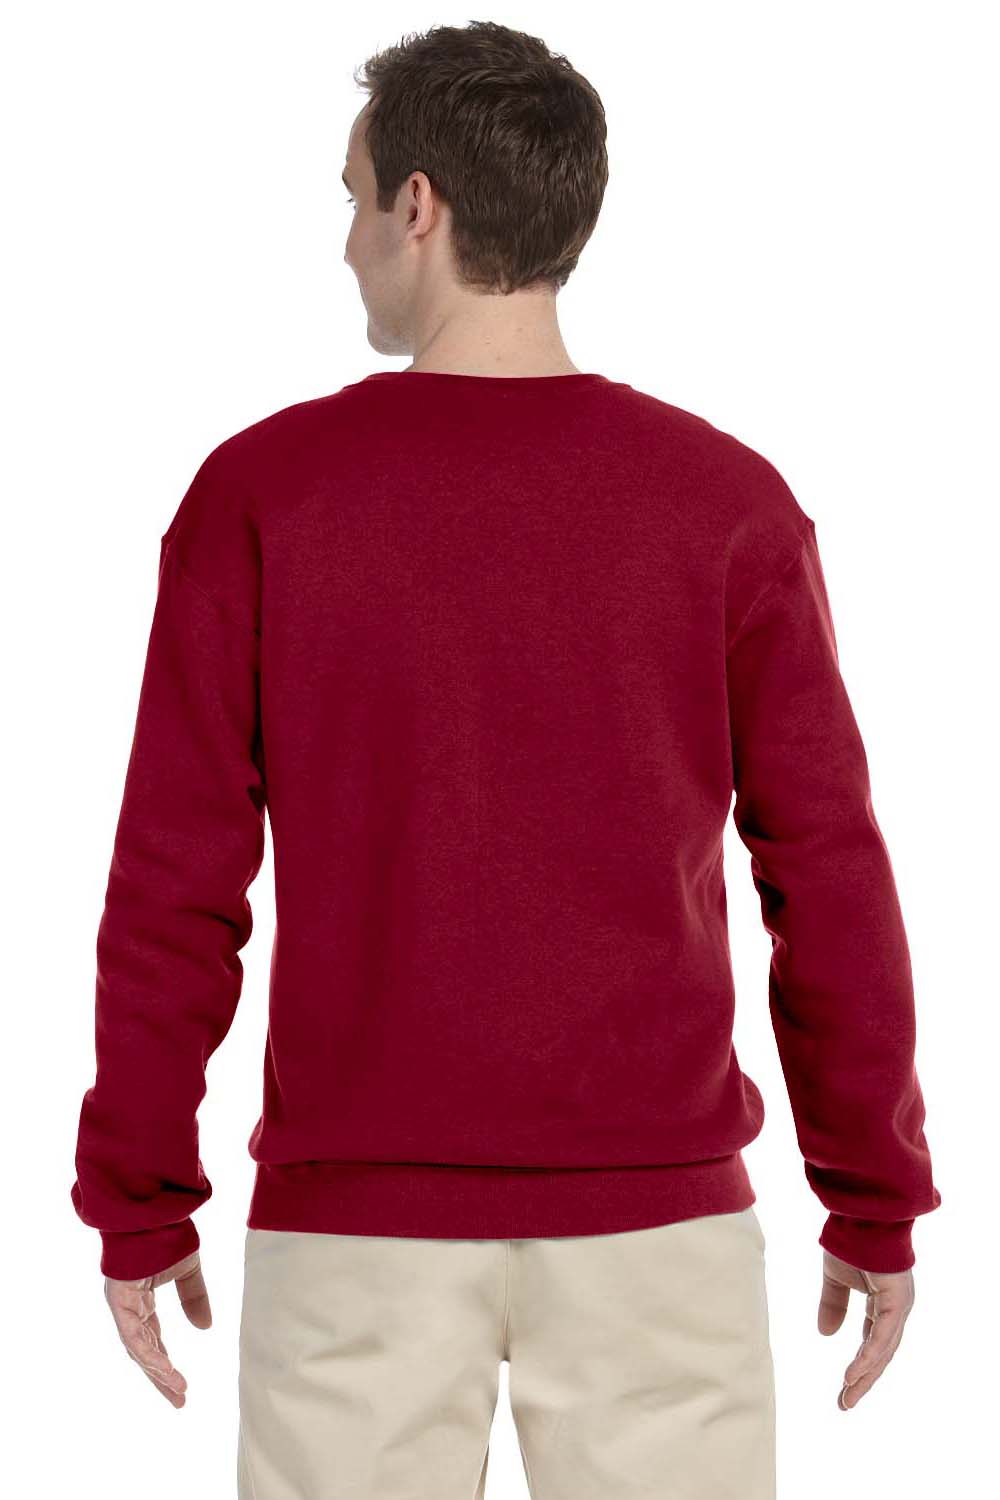 Jerzees 562 Mens NuBlend Fleece Crewneck Sweatshirt Cardinal Red Back